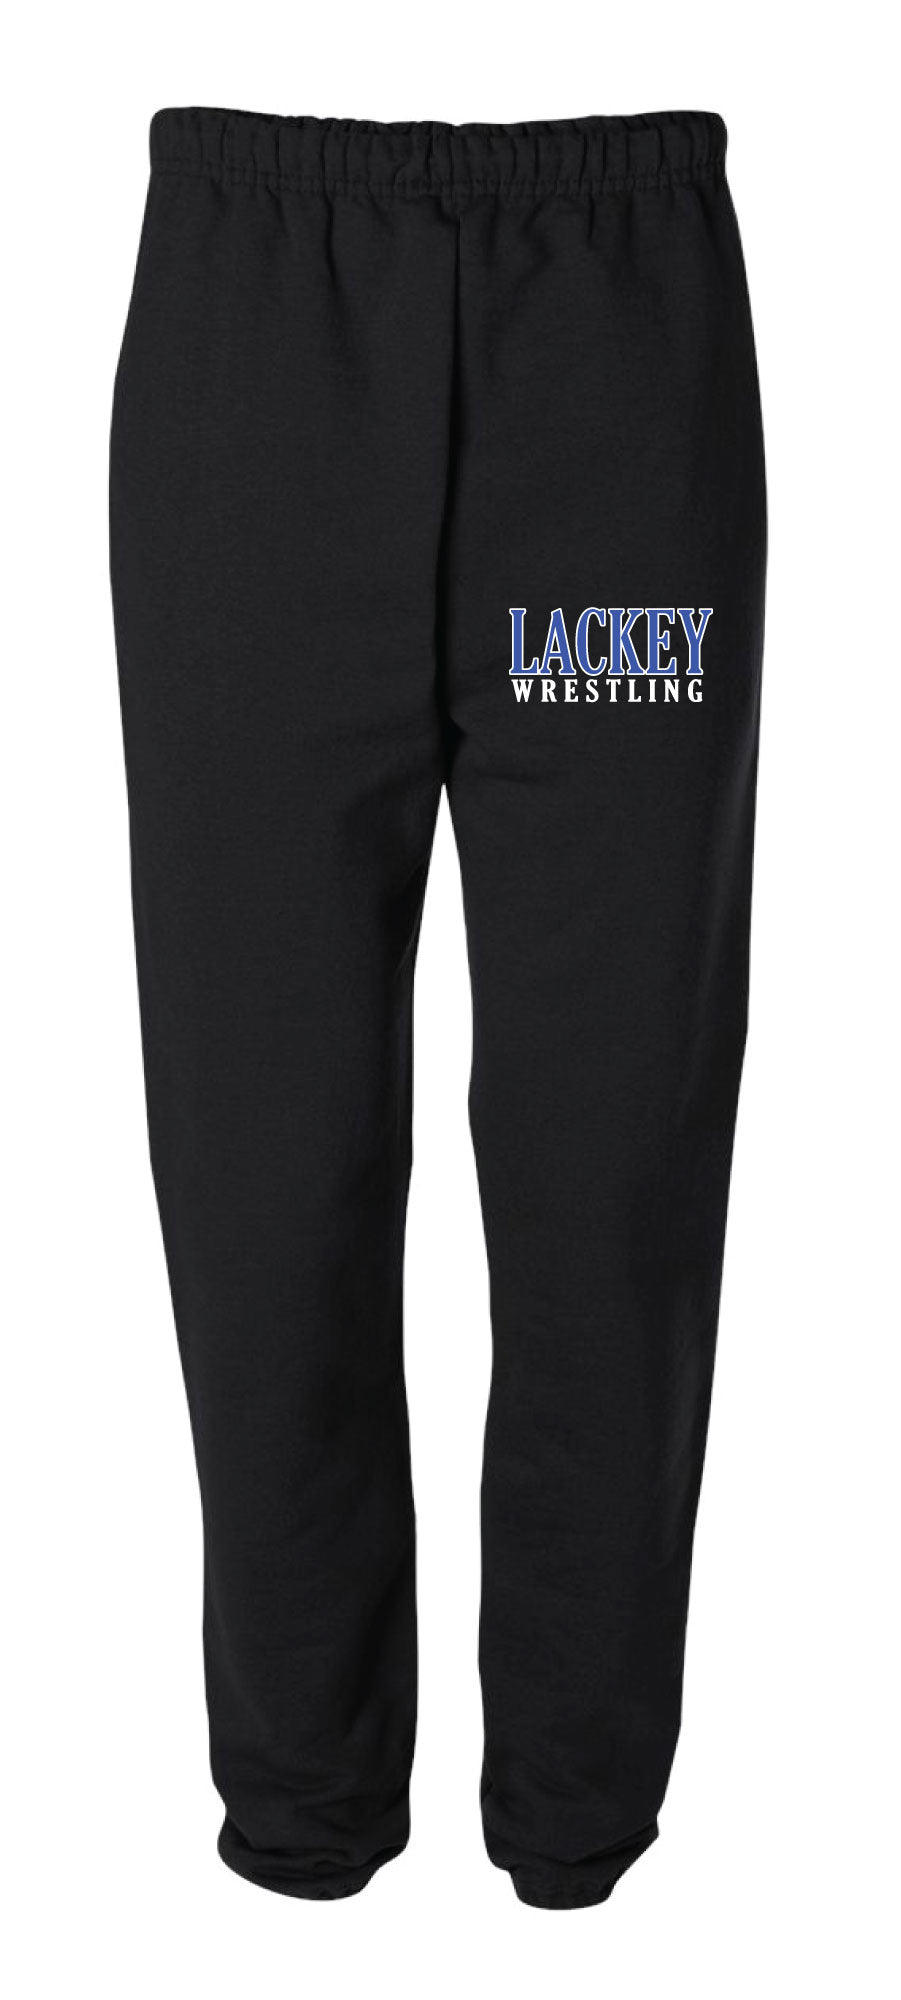 Lackey Wrestling Cotton Sweatpants - Black - 5KounT2018